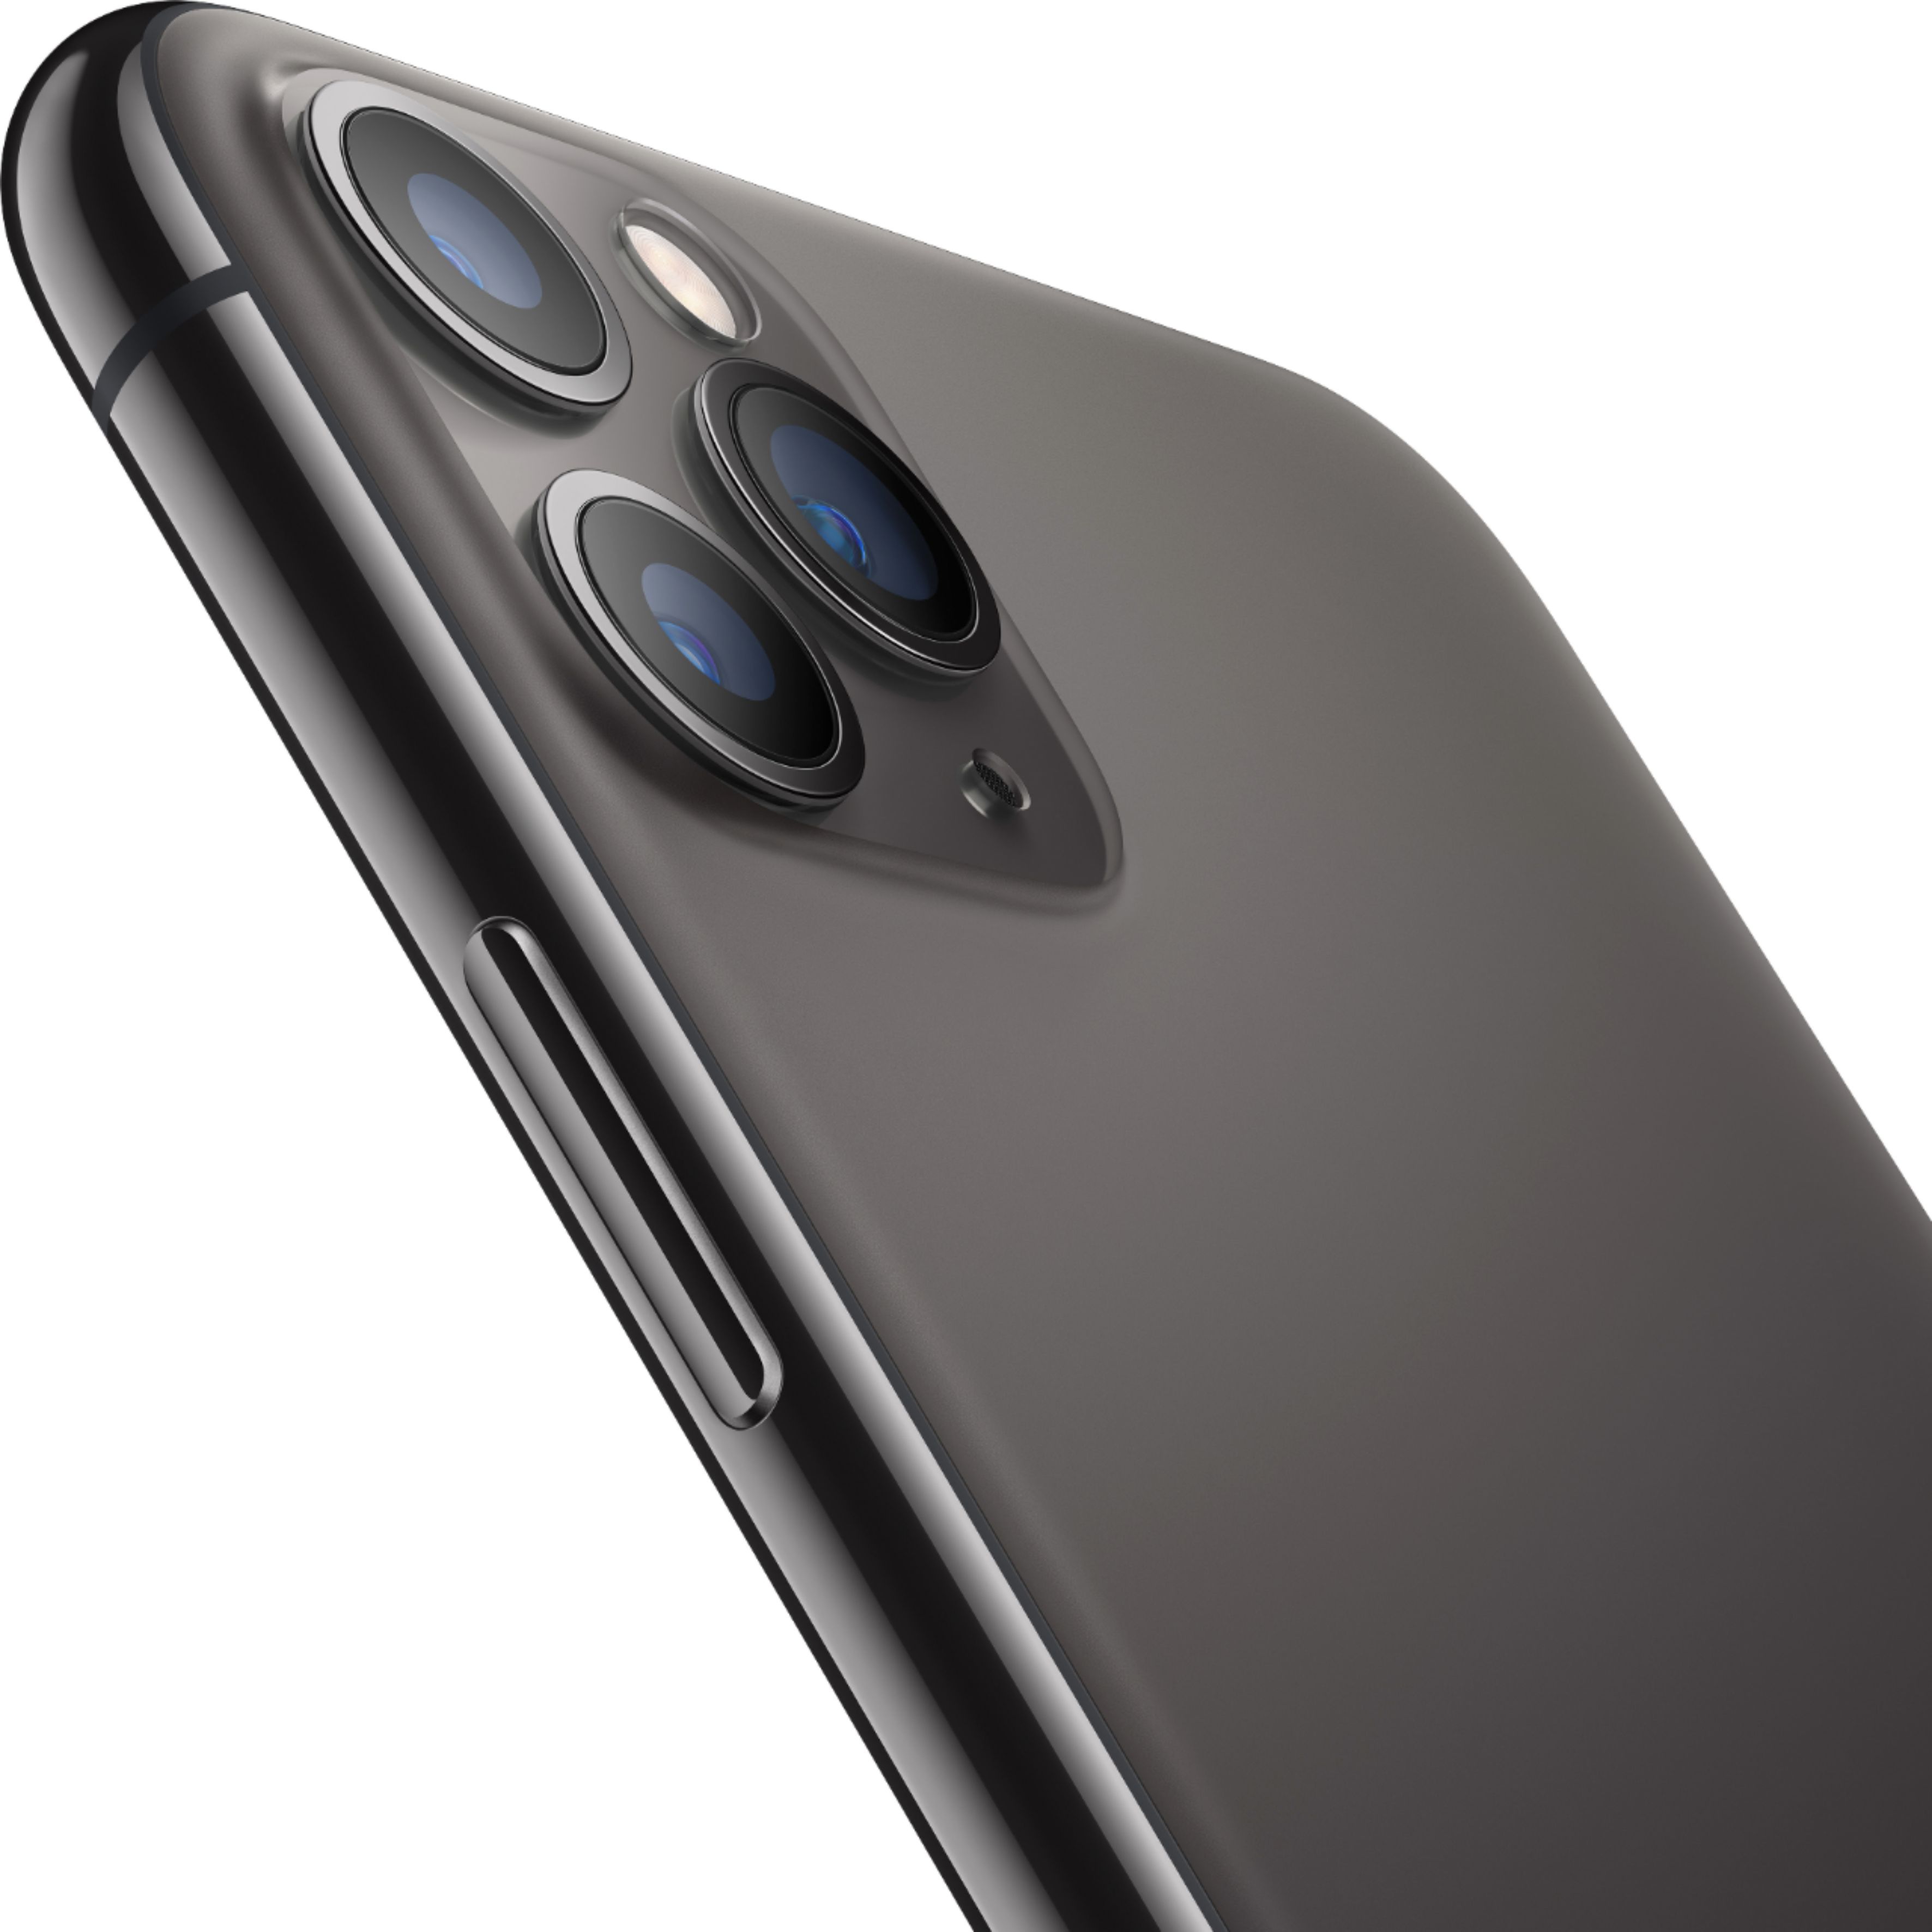 Apple Iphone 11 Pro 256gb Space Gray Verizon Mwcm2ll A Best Buy